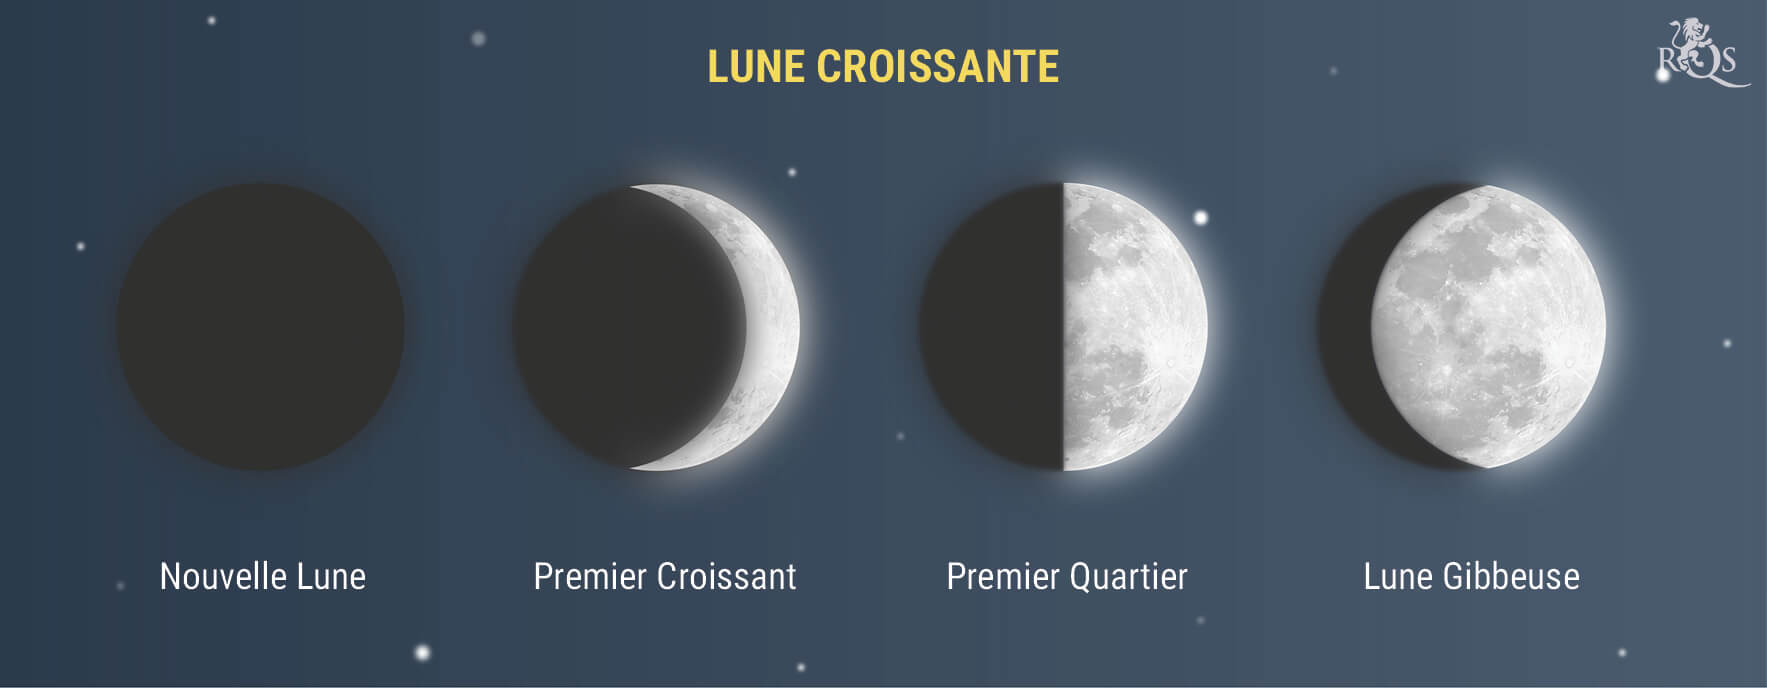 Lune Croissante